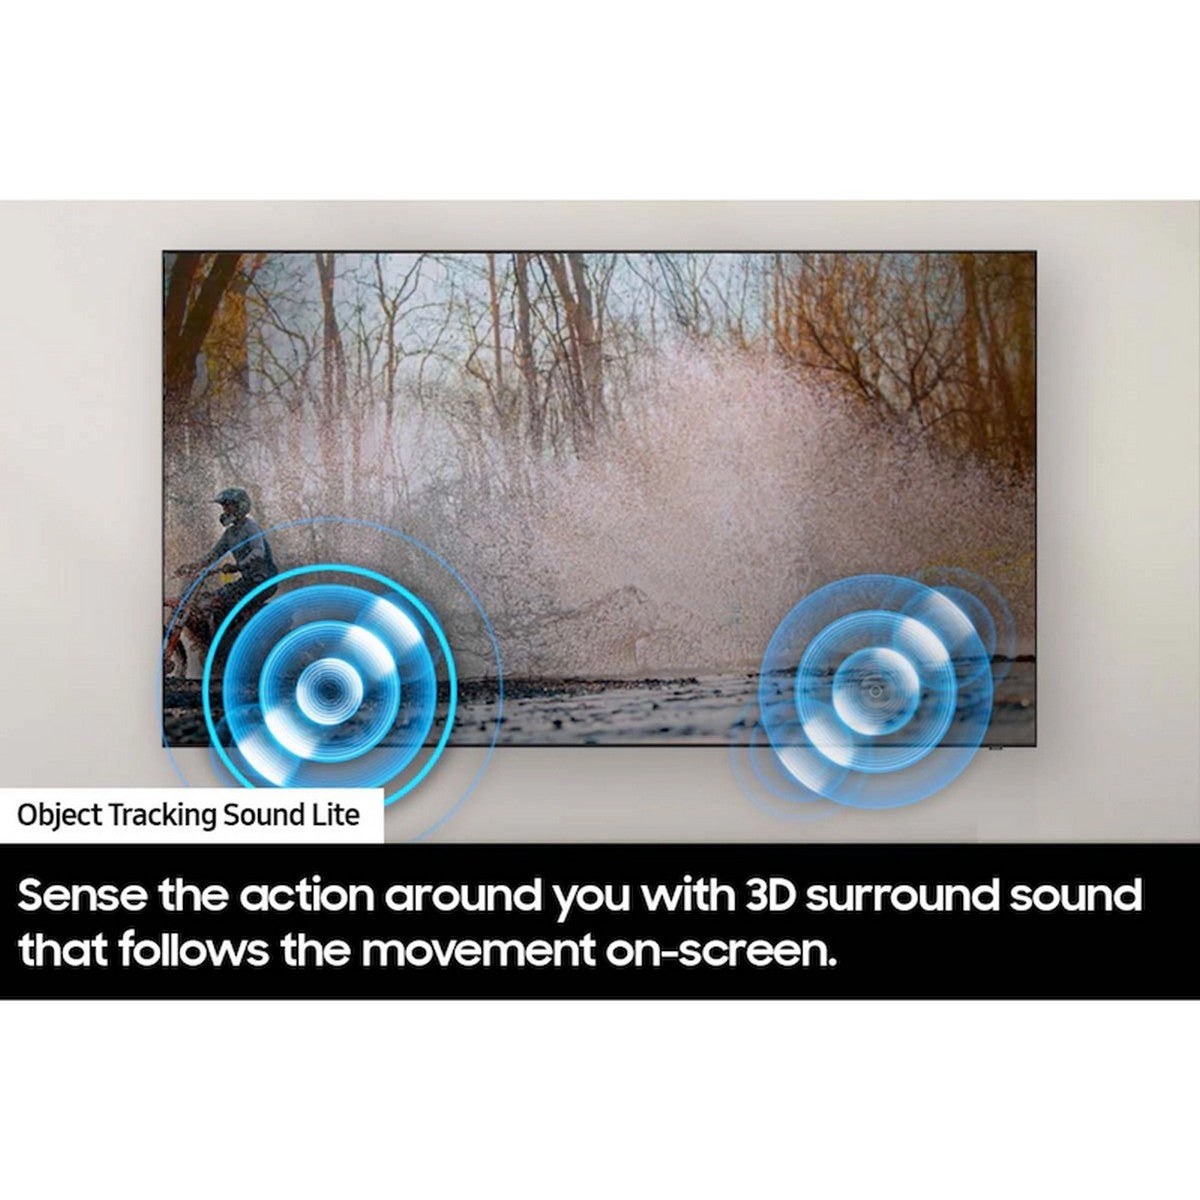 Samsung CU7000 85-Inch Class Crystal 7 Series UHD LED Smart TV